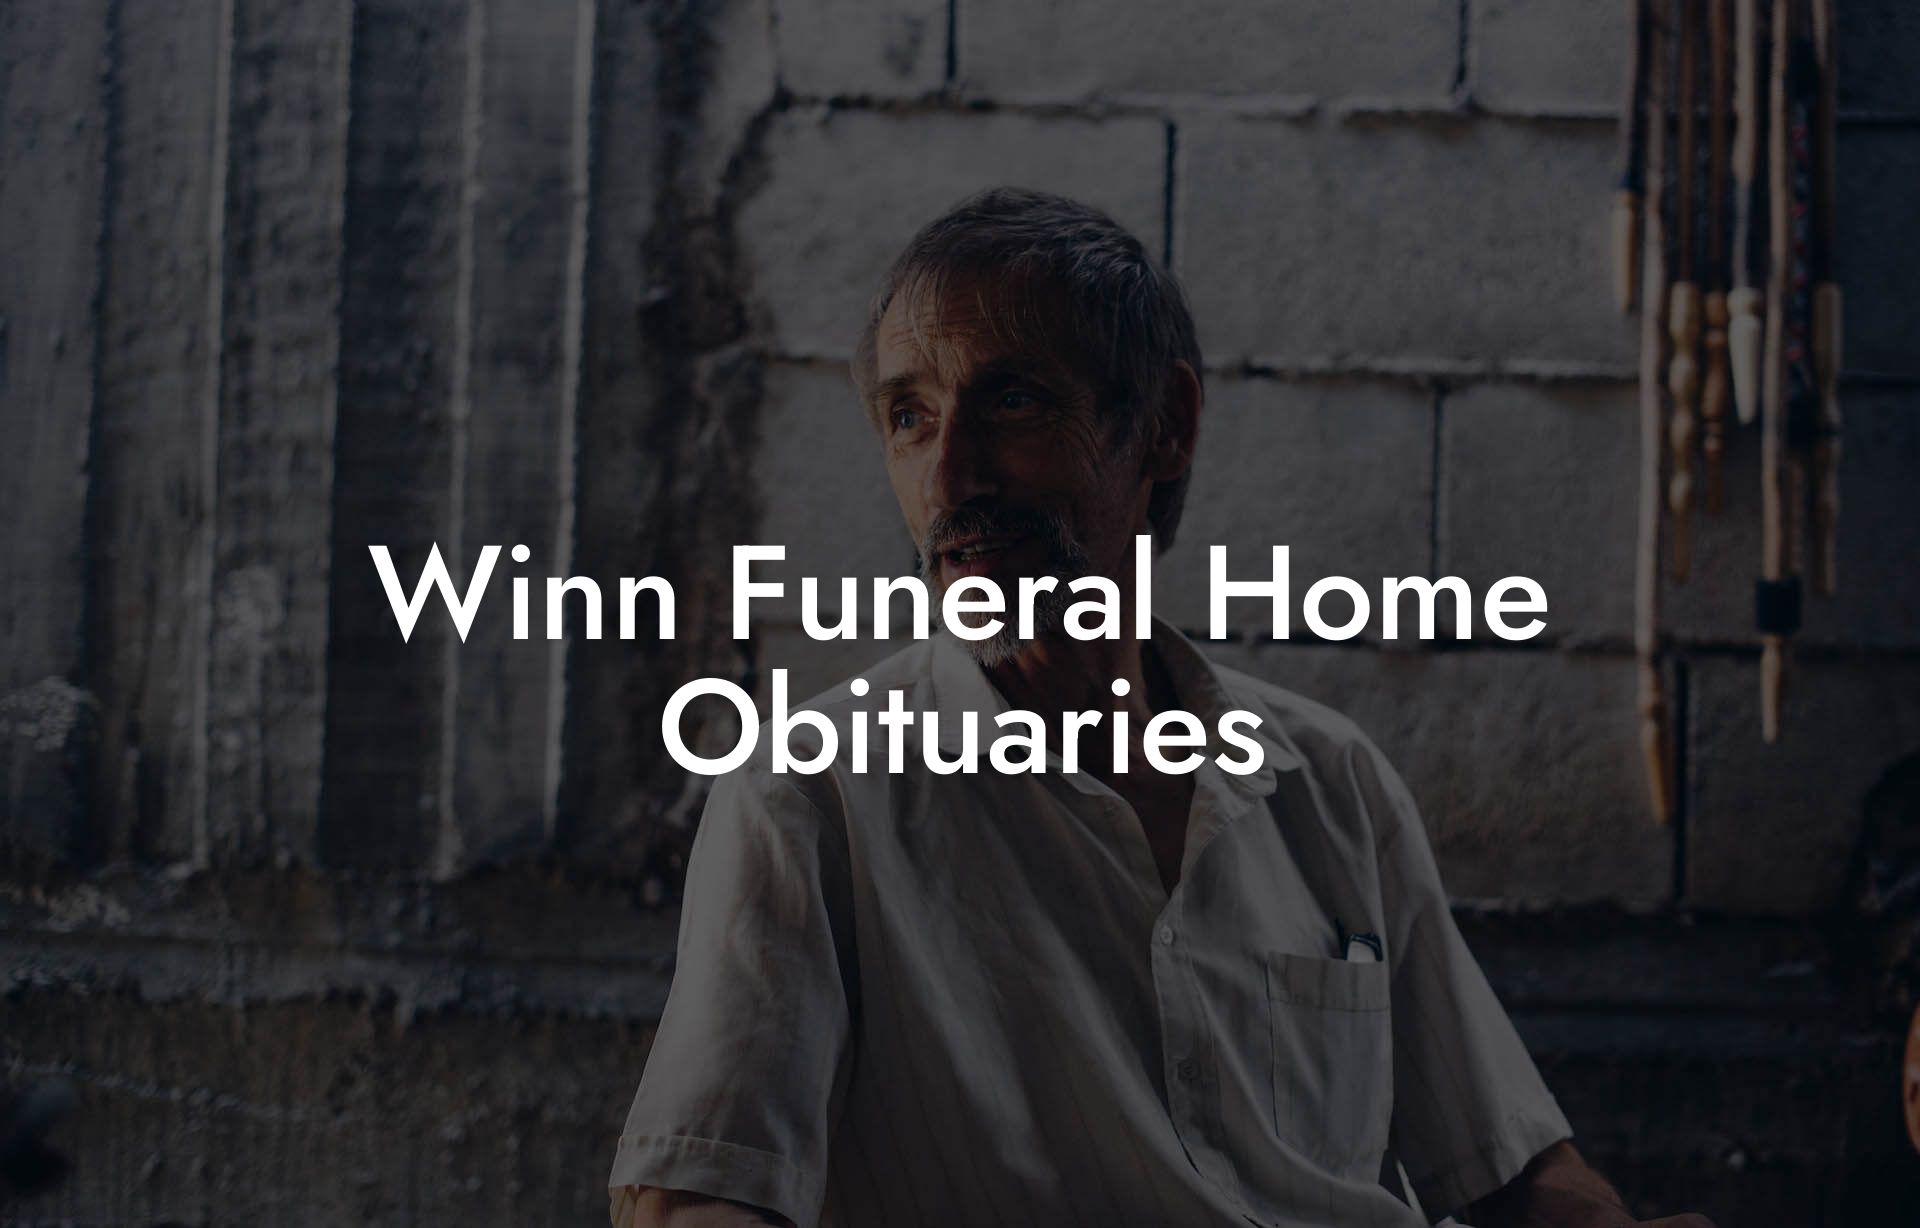 Winn Funeral Home Obituaries